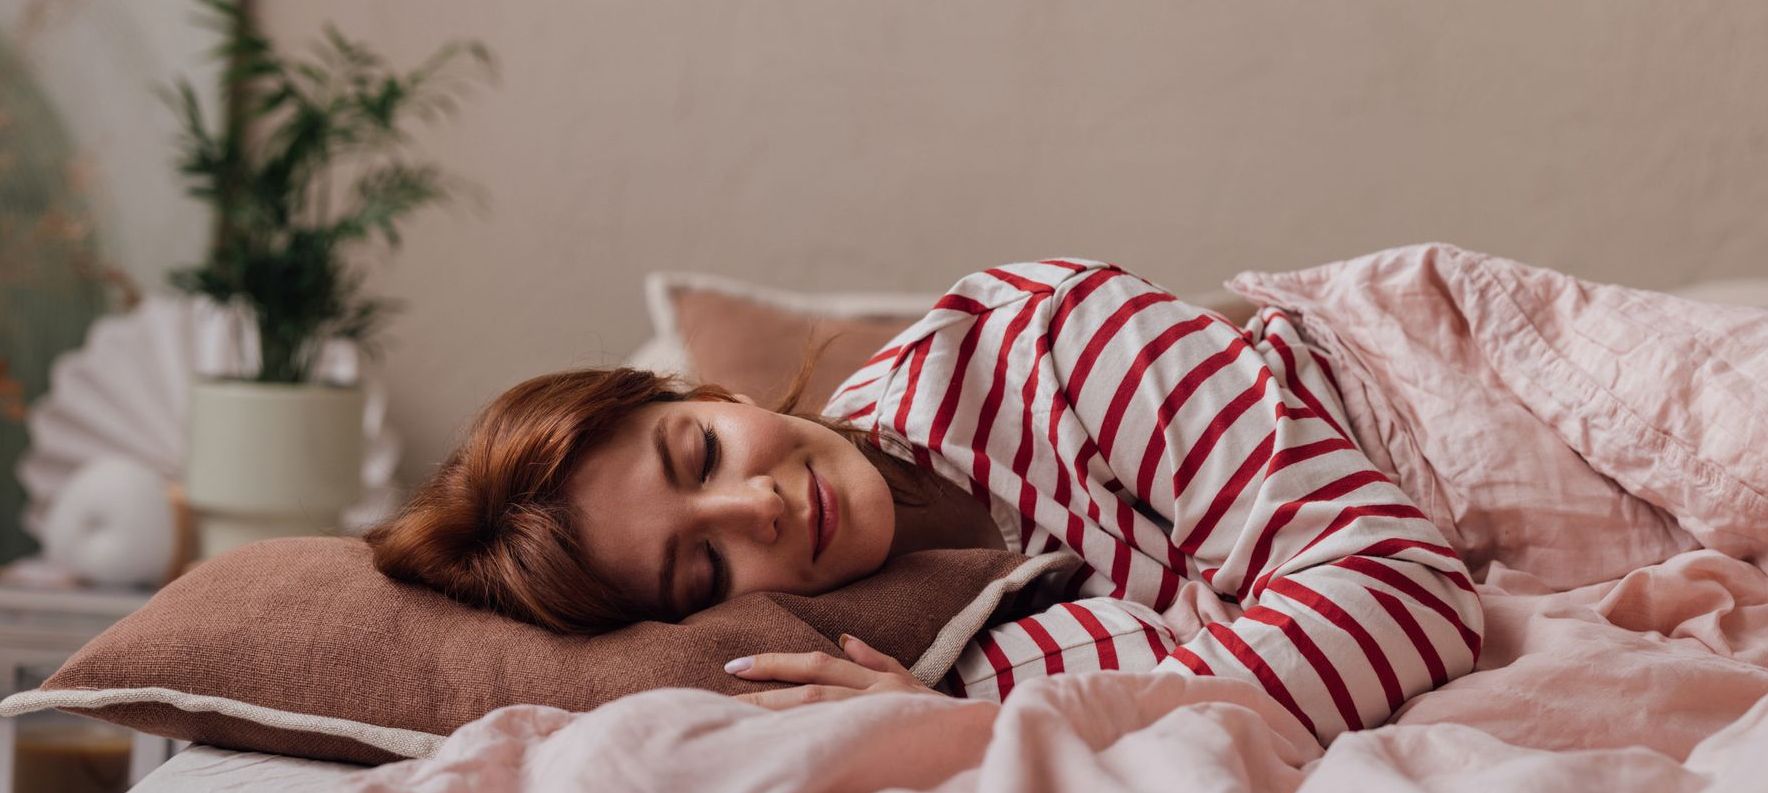 Sleep is essential for good health - Top tips for a healthy sleep